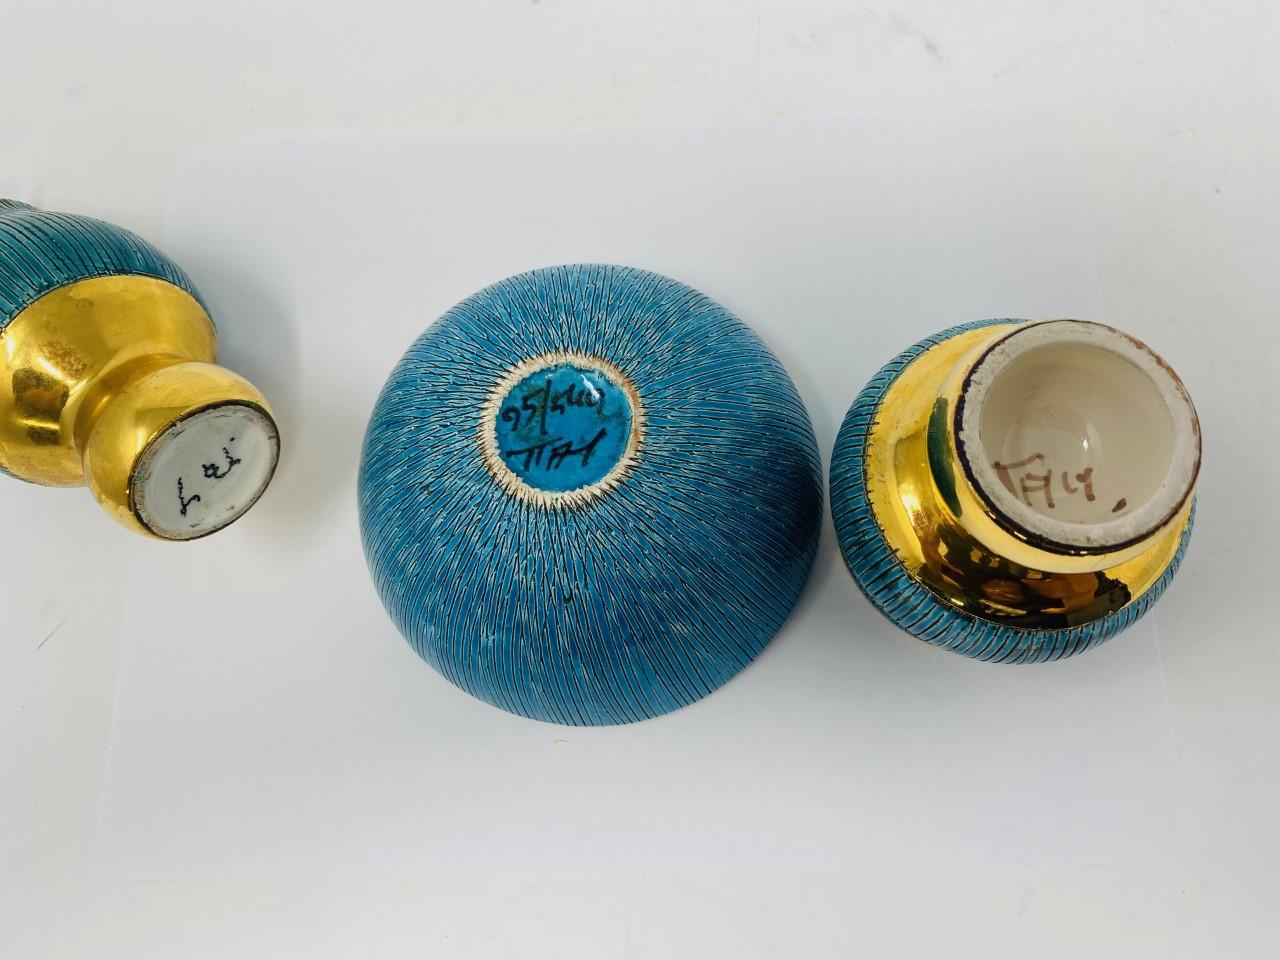 Vintage Aldo Londi Bitossi Ceramic Ashtray, Lighter and Cigarette Holder Italy In Good Condition For Sale In San Diego, CA